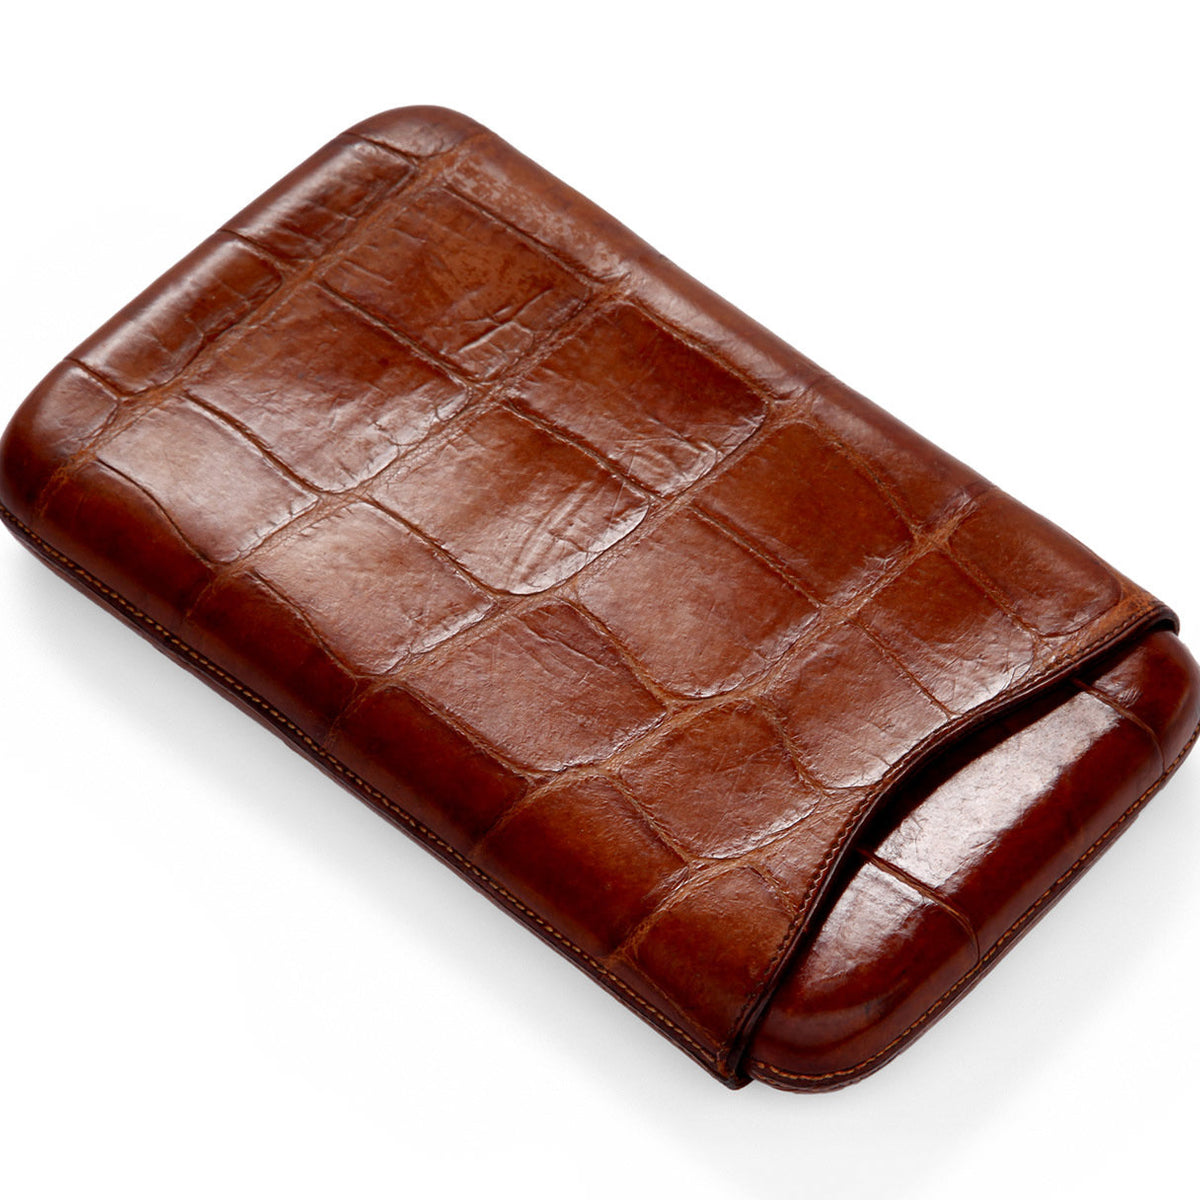 Red crocodile cigar case - Luxury leathergoods